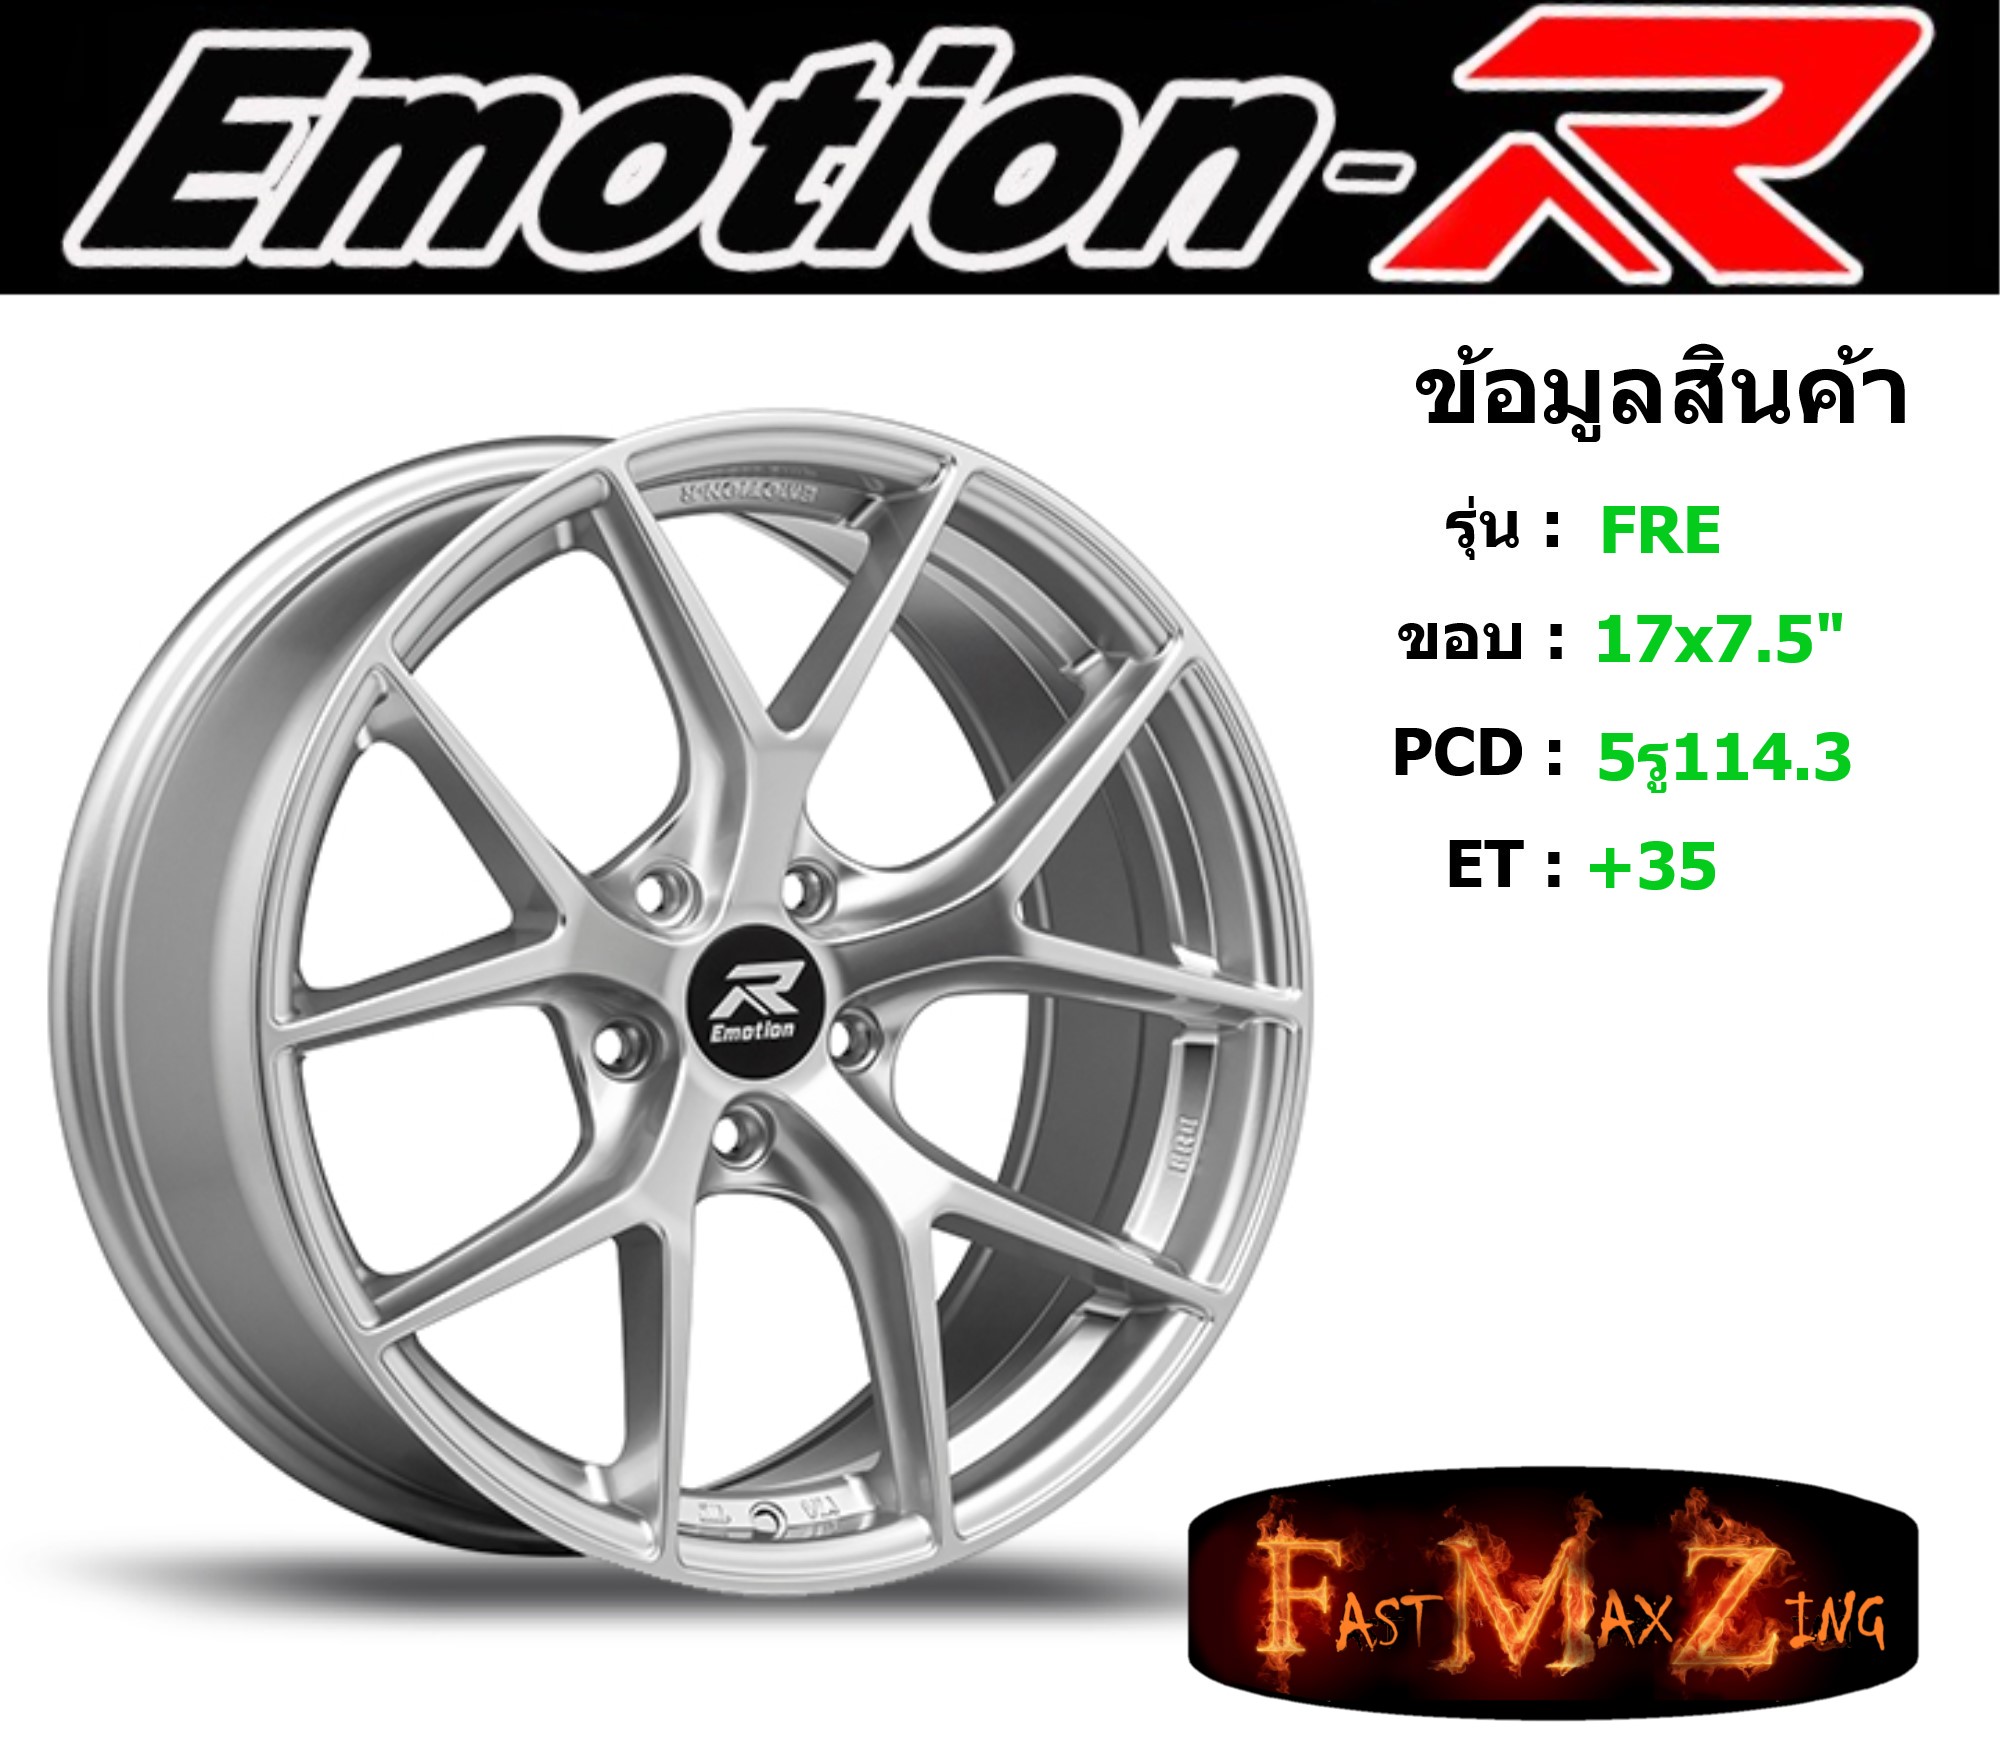 EmotionR Wheel FRE ขอบ 17x7.5